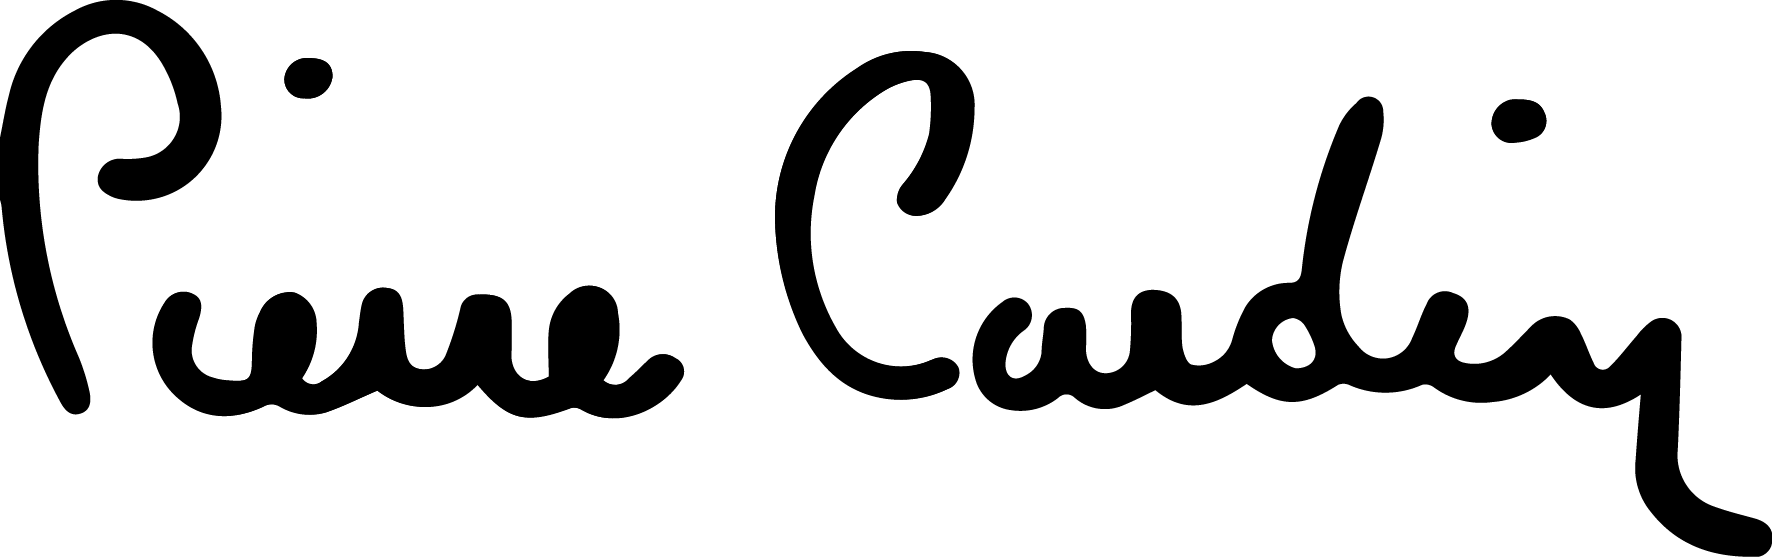 Pierre Cardin Logo [pierrecardin.com.tr] png